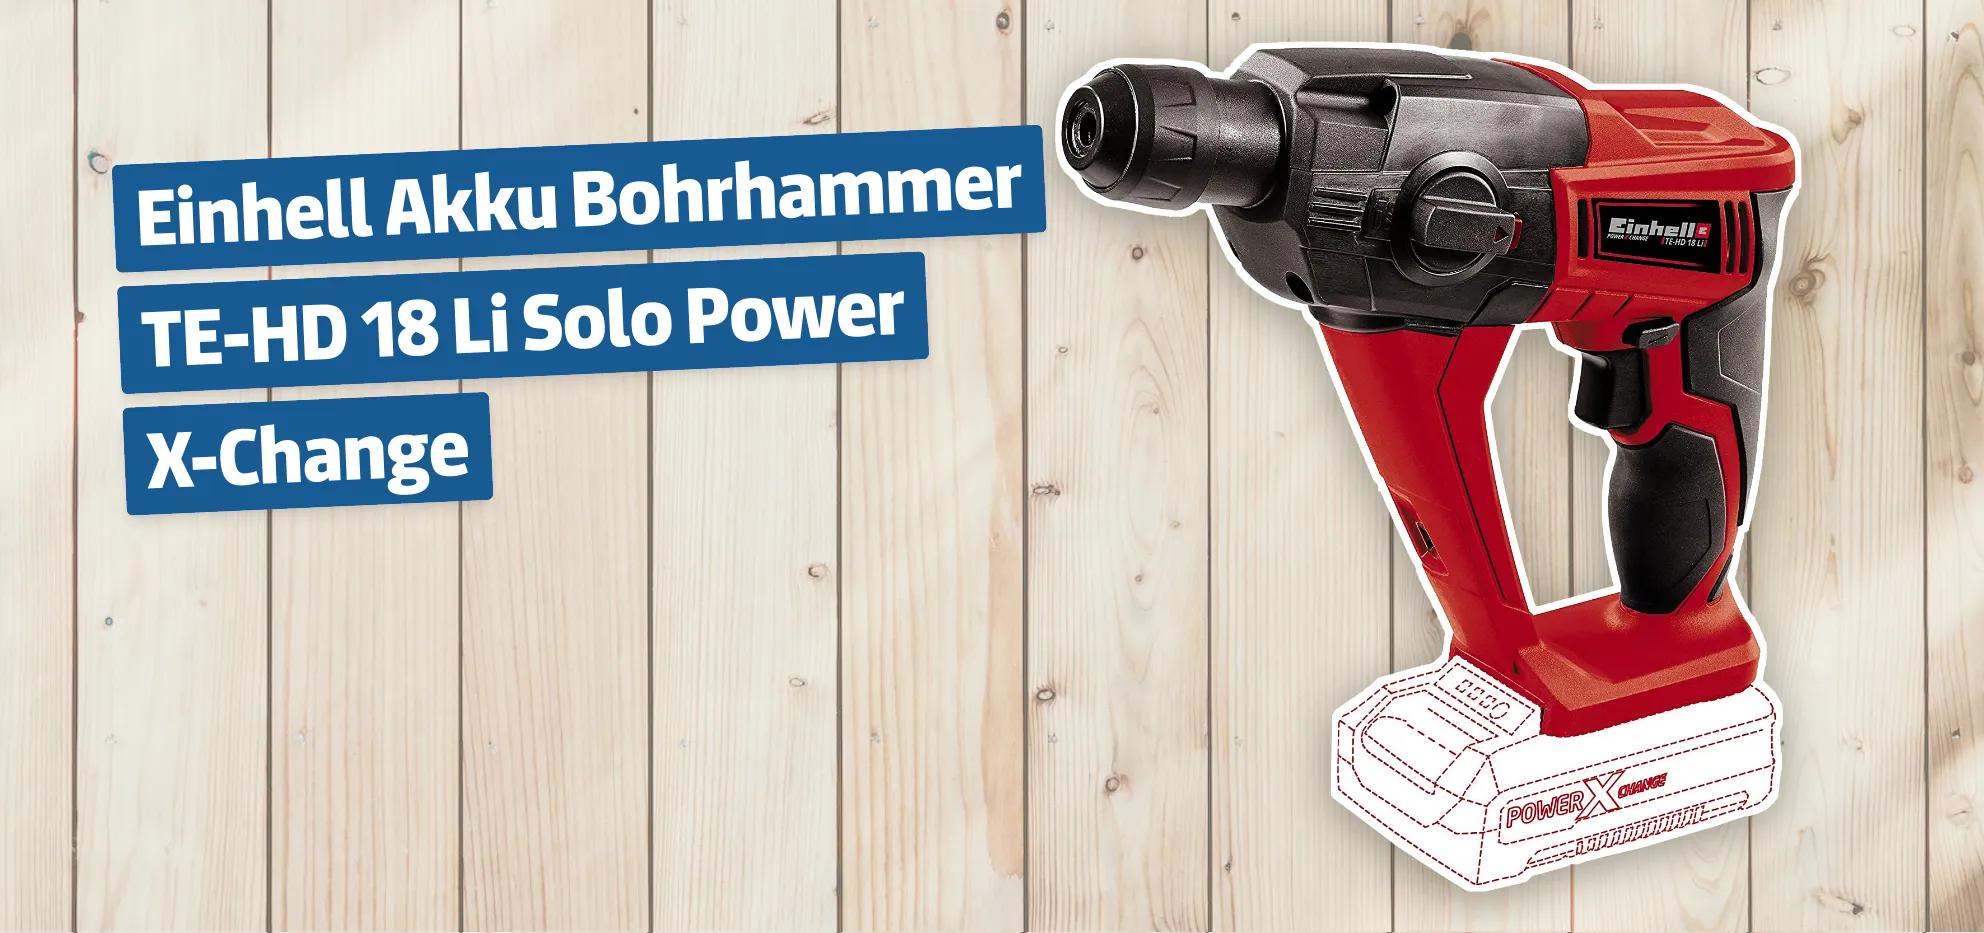 Einhell Akku Bohrhammer TE-HD 18 Li Solo Power X-Change